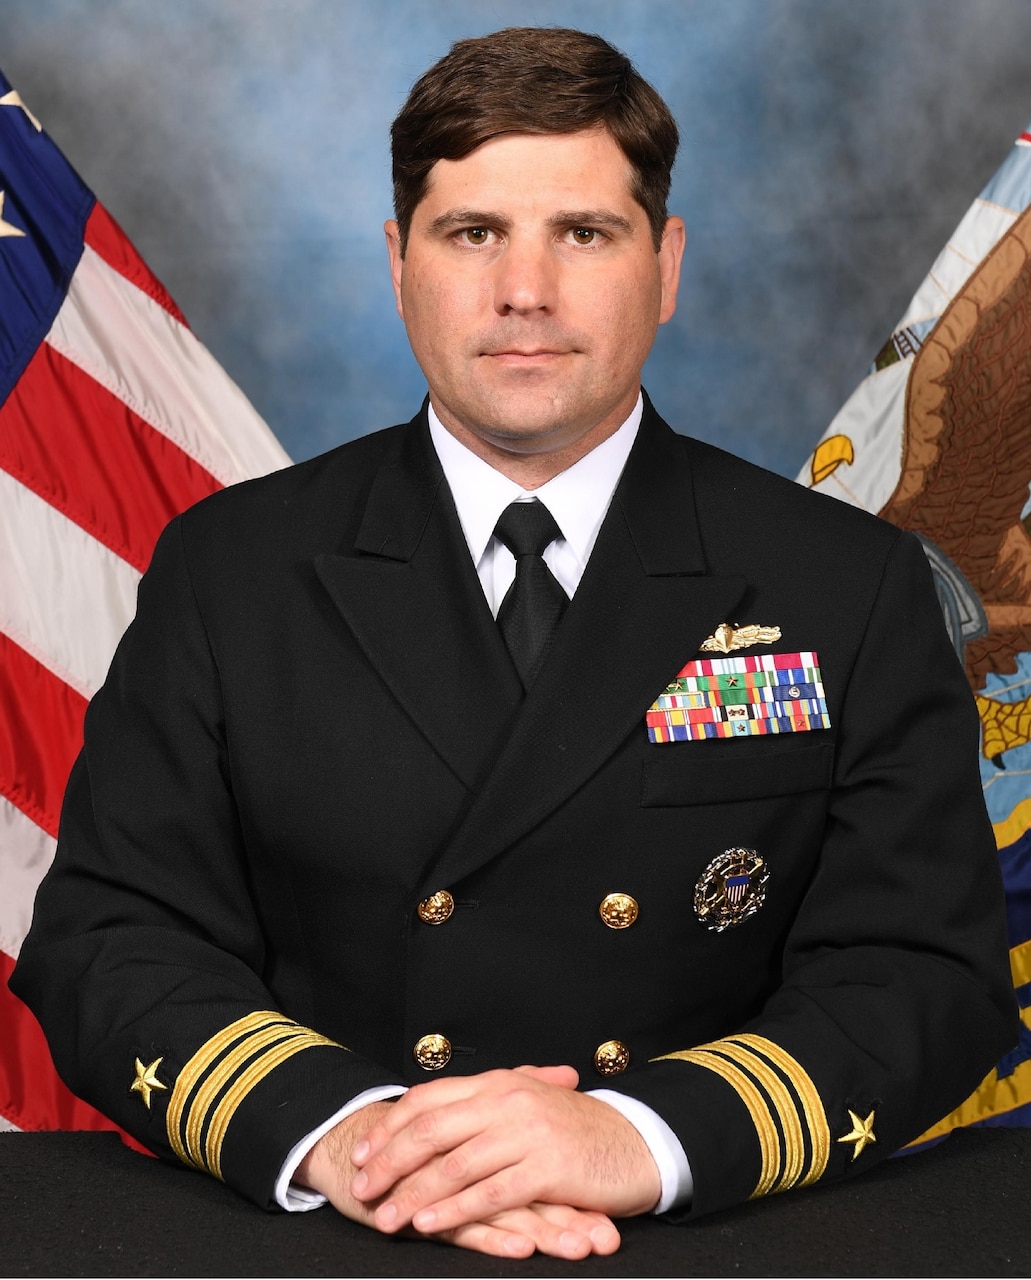 Commander Justin M. Bummara